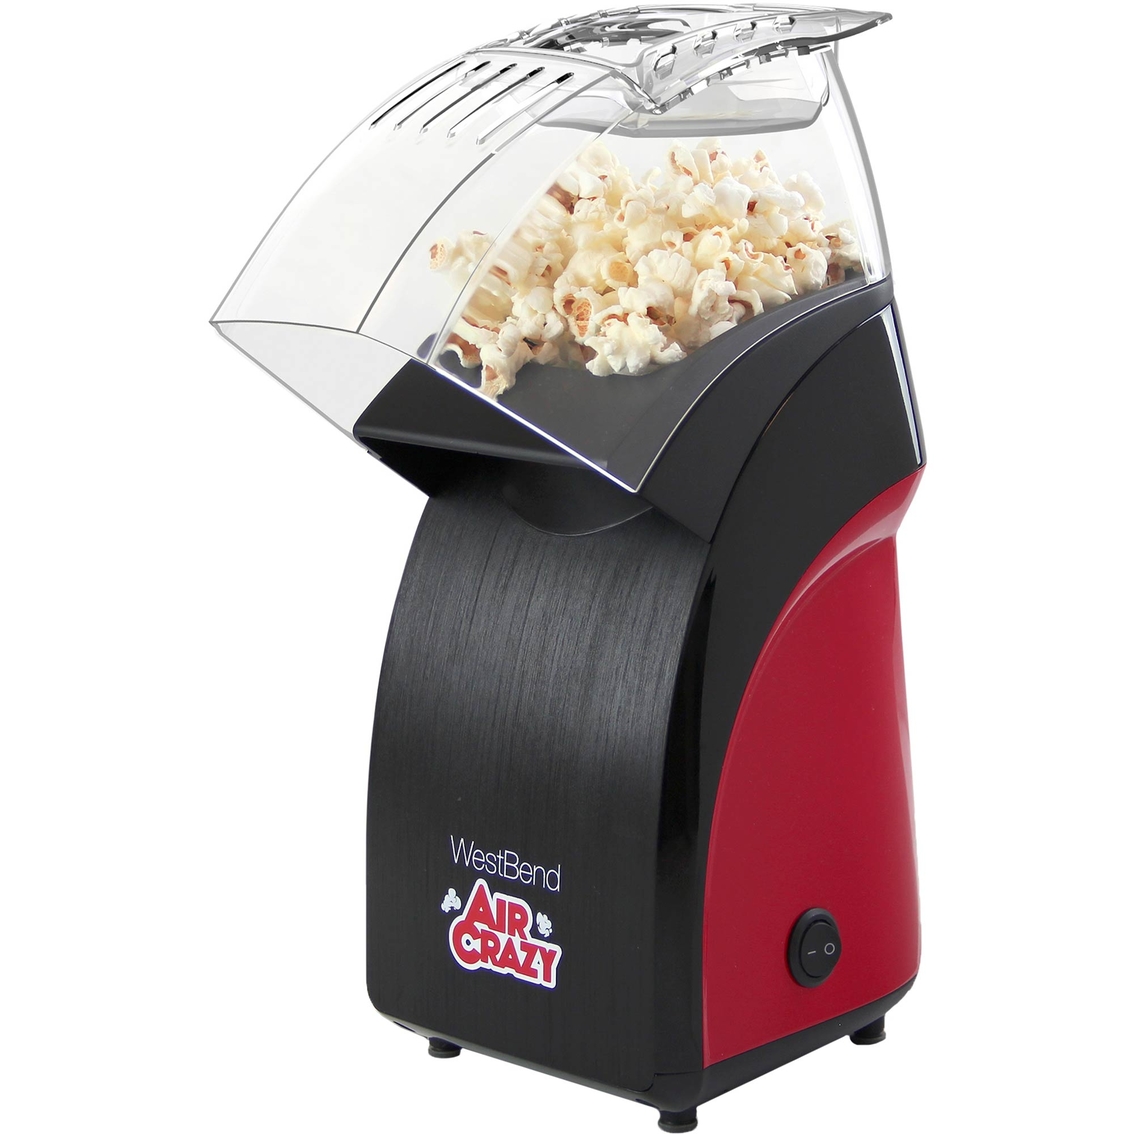 West Bend 4 Quart Air Crazy Popcorn Maker Machine, Popcorn Makers, Furniture & Appliances